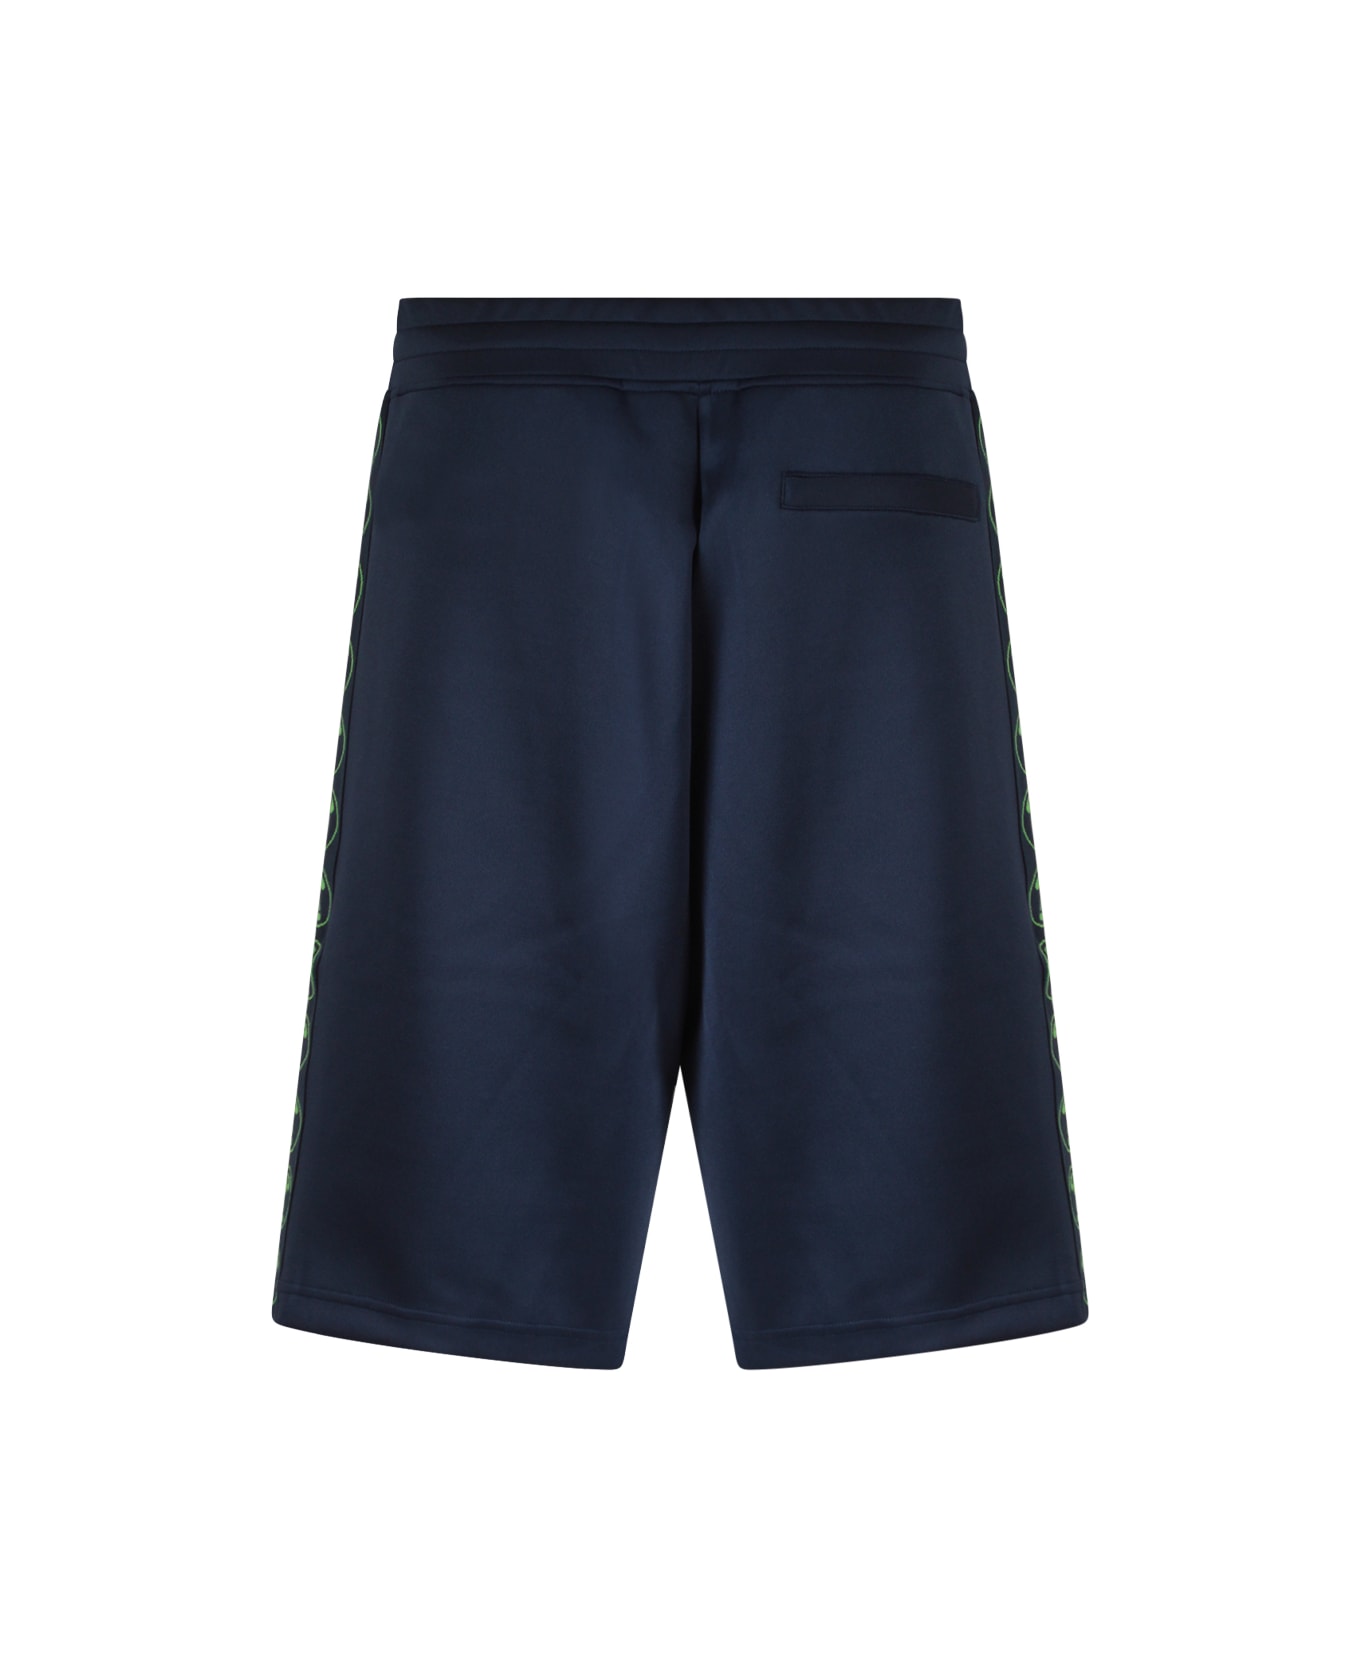 Moschino Bermuda Shorts - Blue